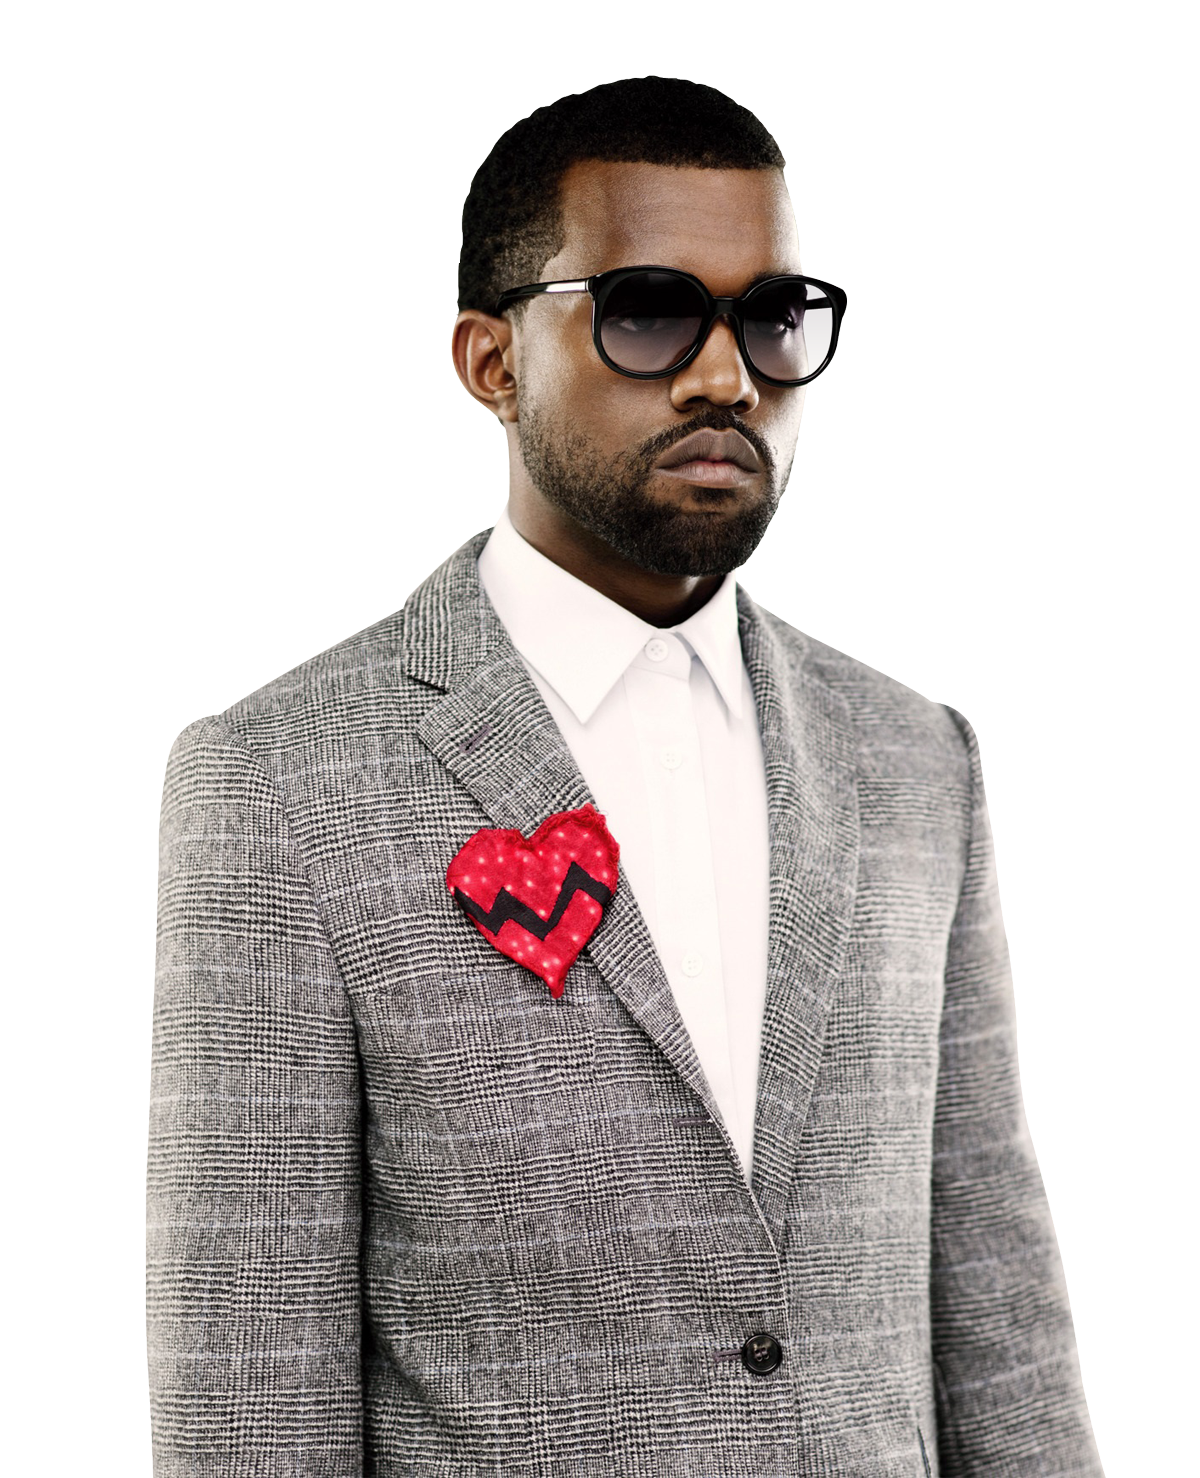 Ye Kanye West Rapper PNG Photo HQ